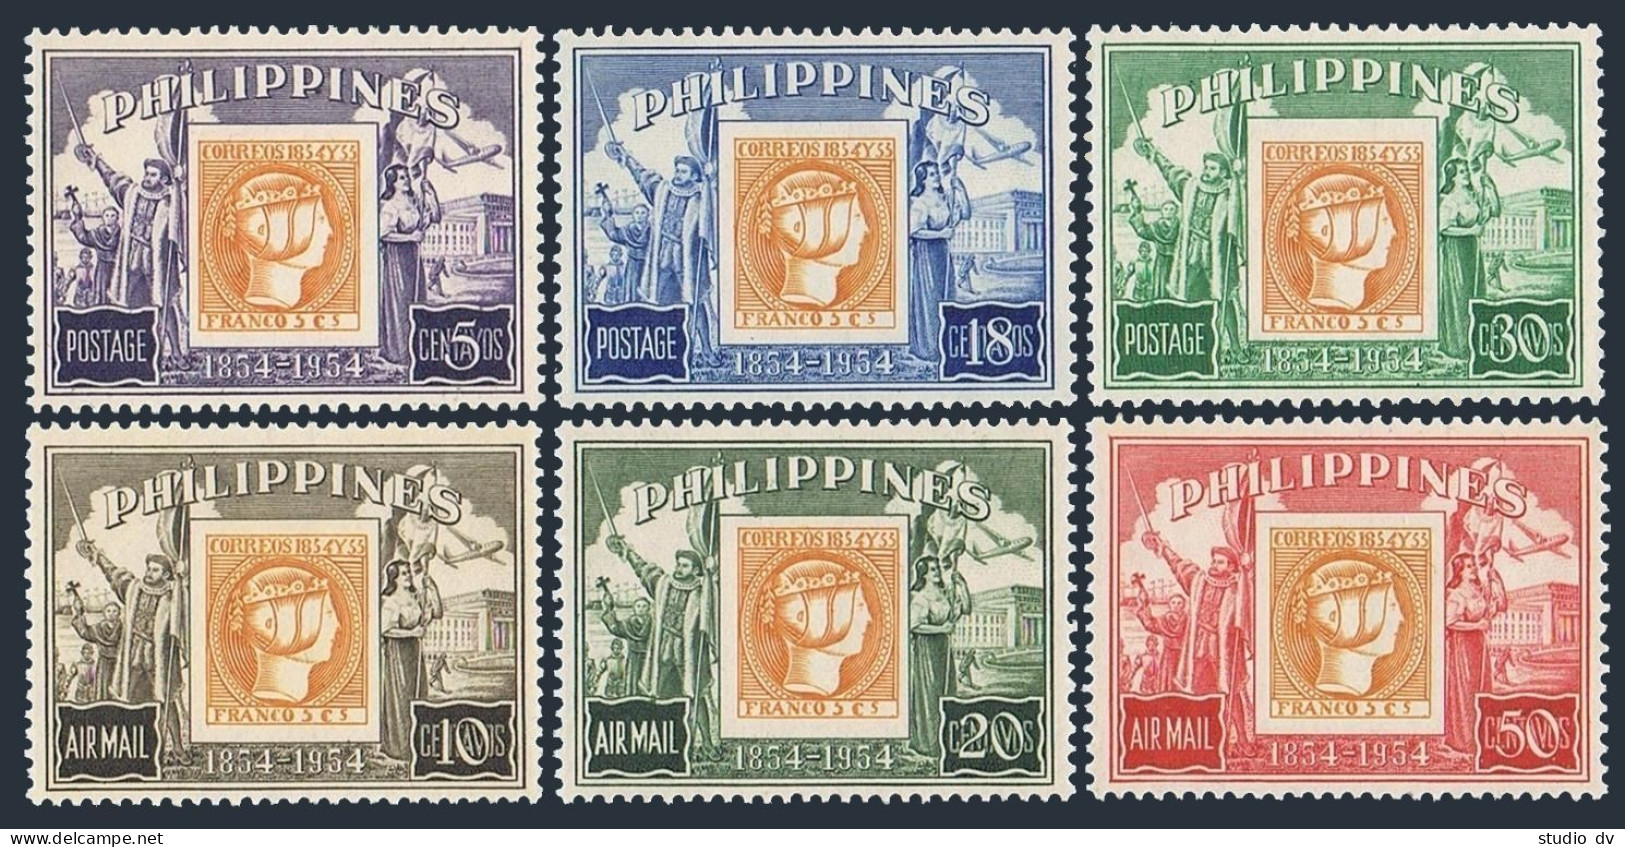 Philippines 605-607, C74-C76, MNH. Mi 575-580. Philippine Stamp,centenary, 1954. - Philippinen